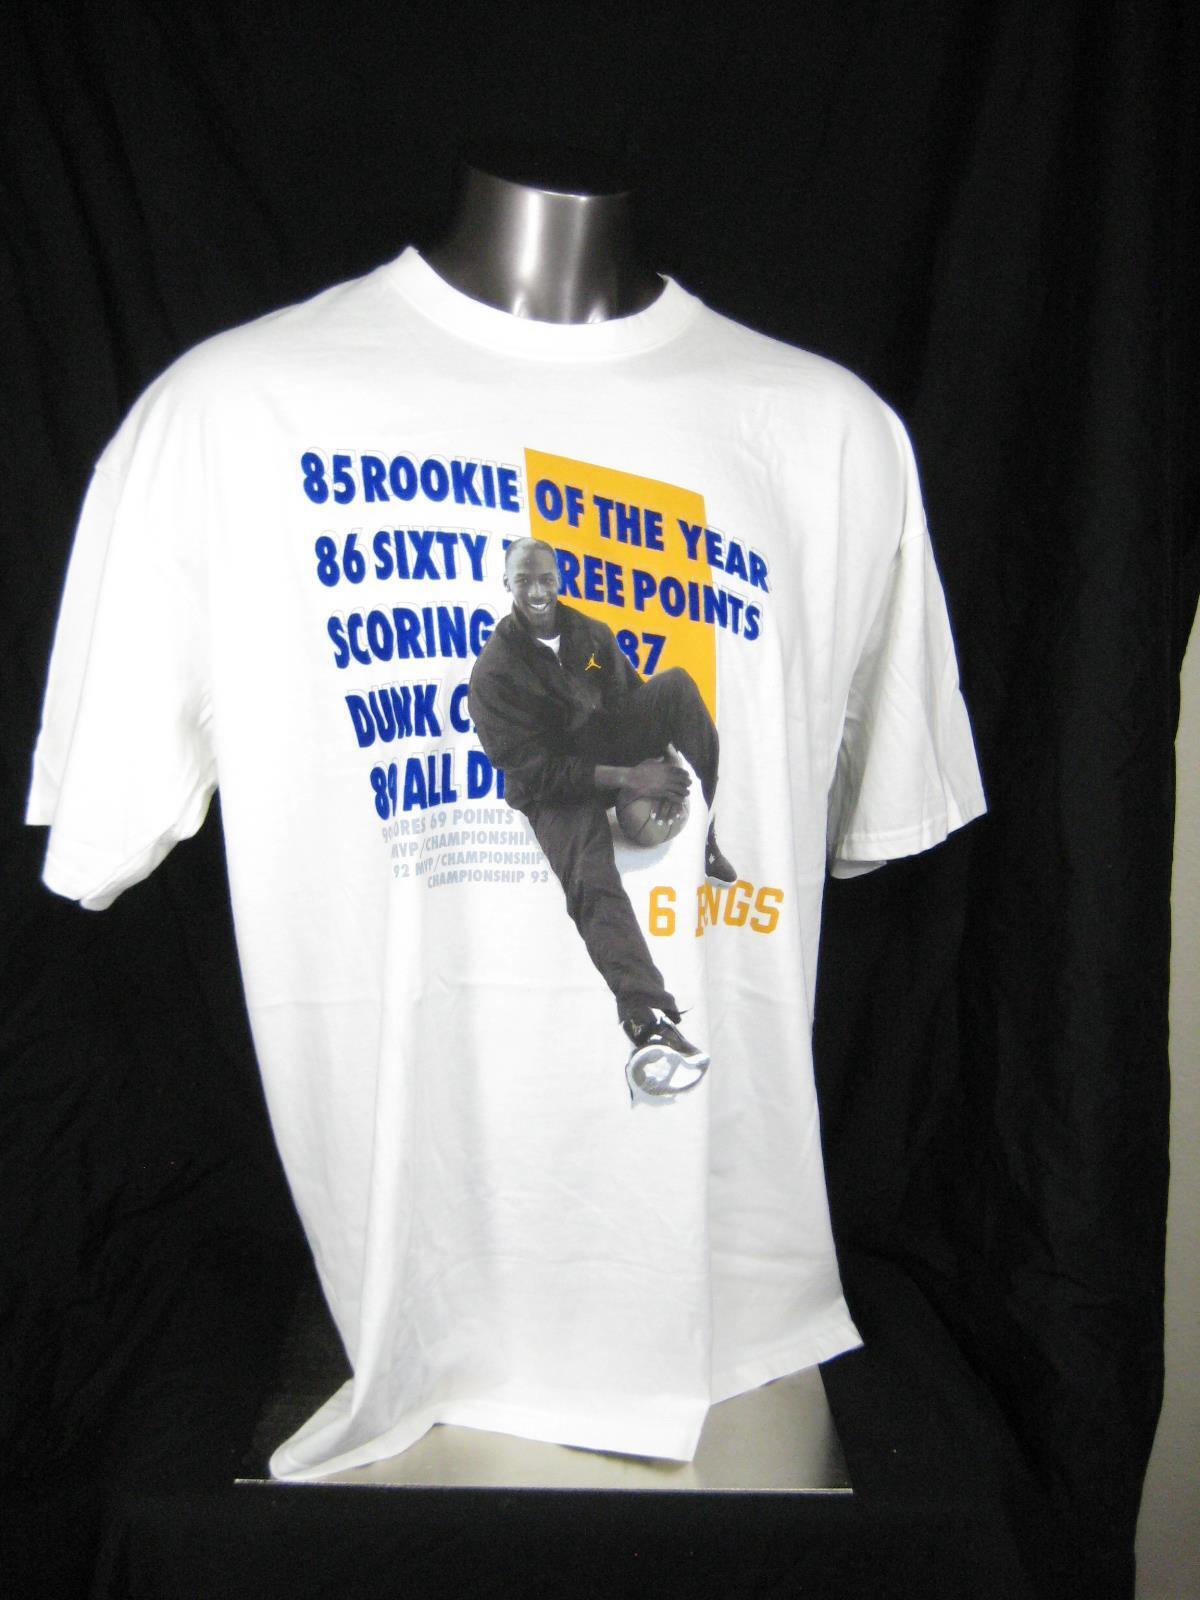 Beautiful 2004 Nike Air Jordan 4 Retro 6 Rings Championship T-Shirt SZ XL space jam xi on eBay